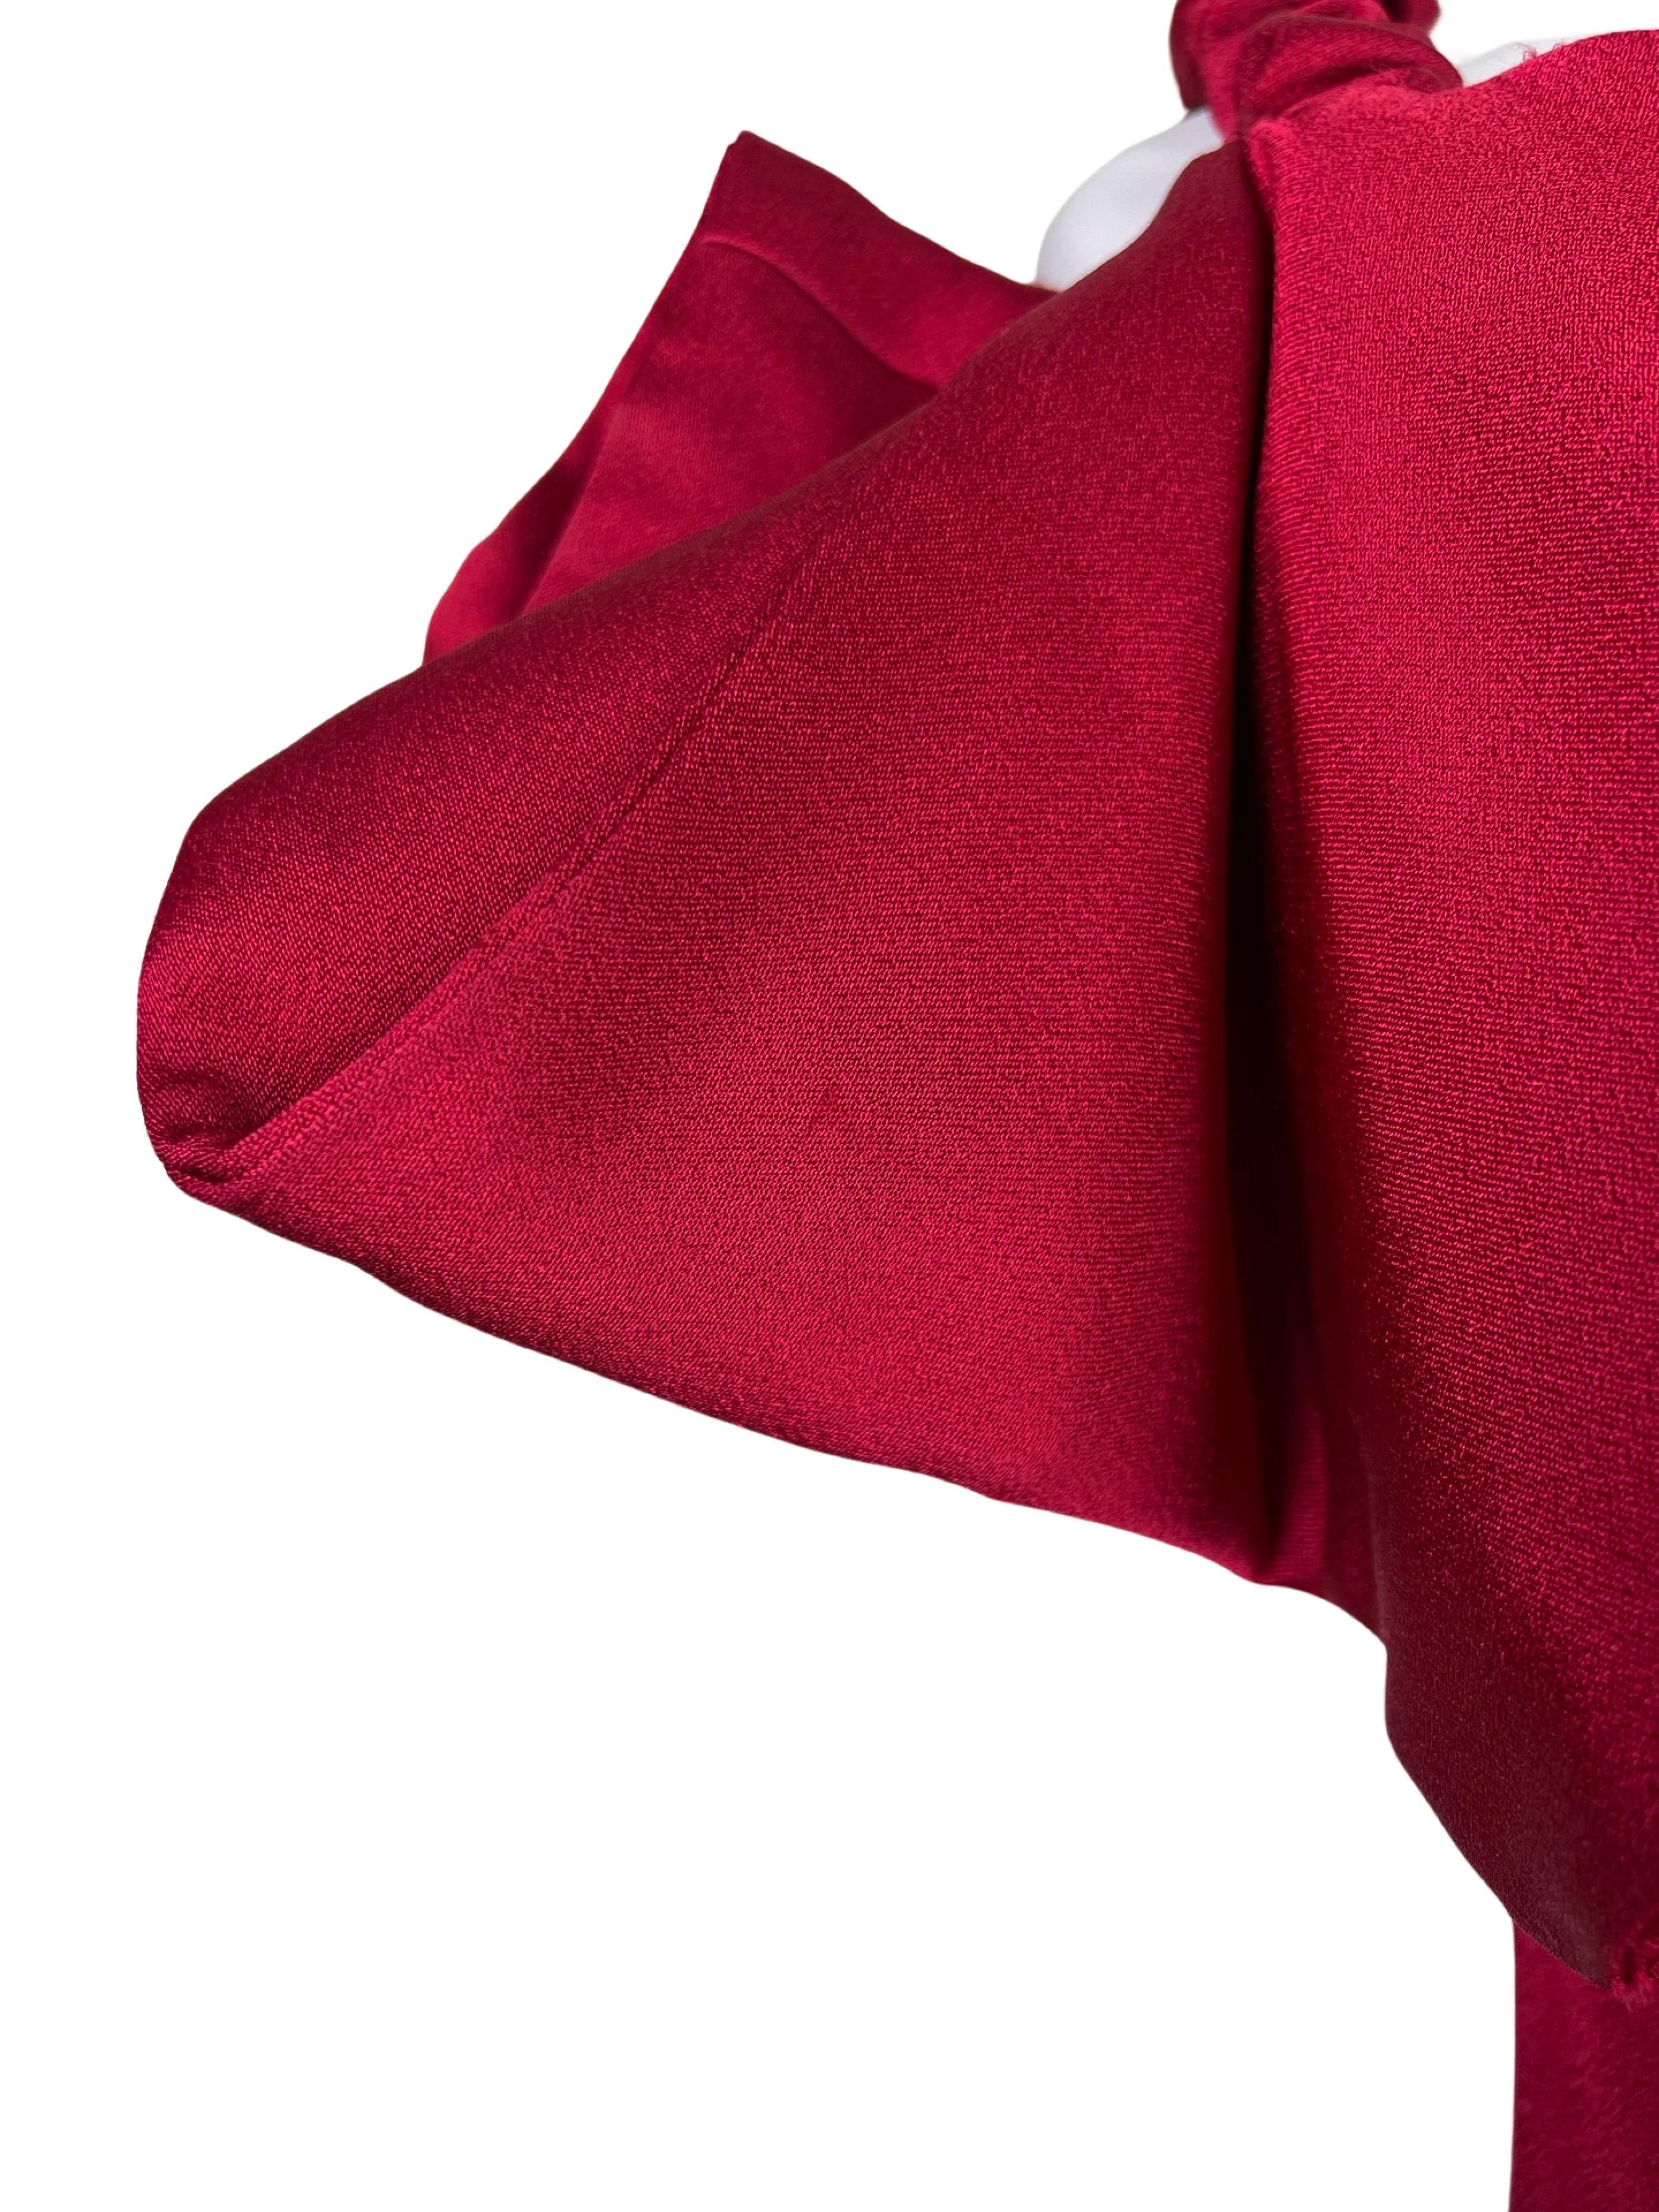 John Galliano Fall 2002 Red Draped Dress For Sale 3